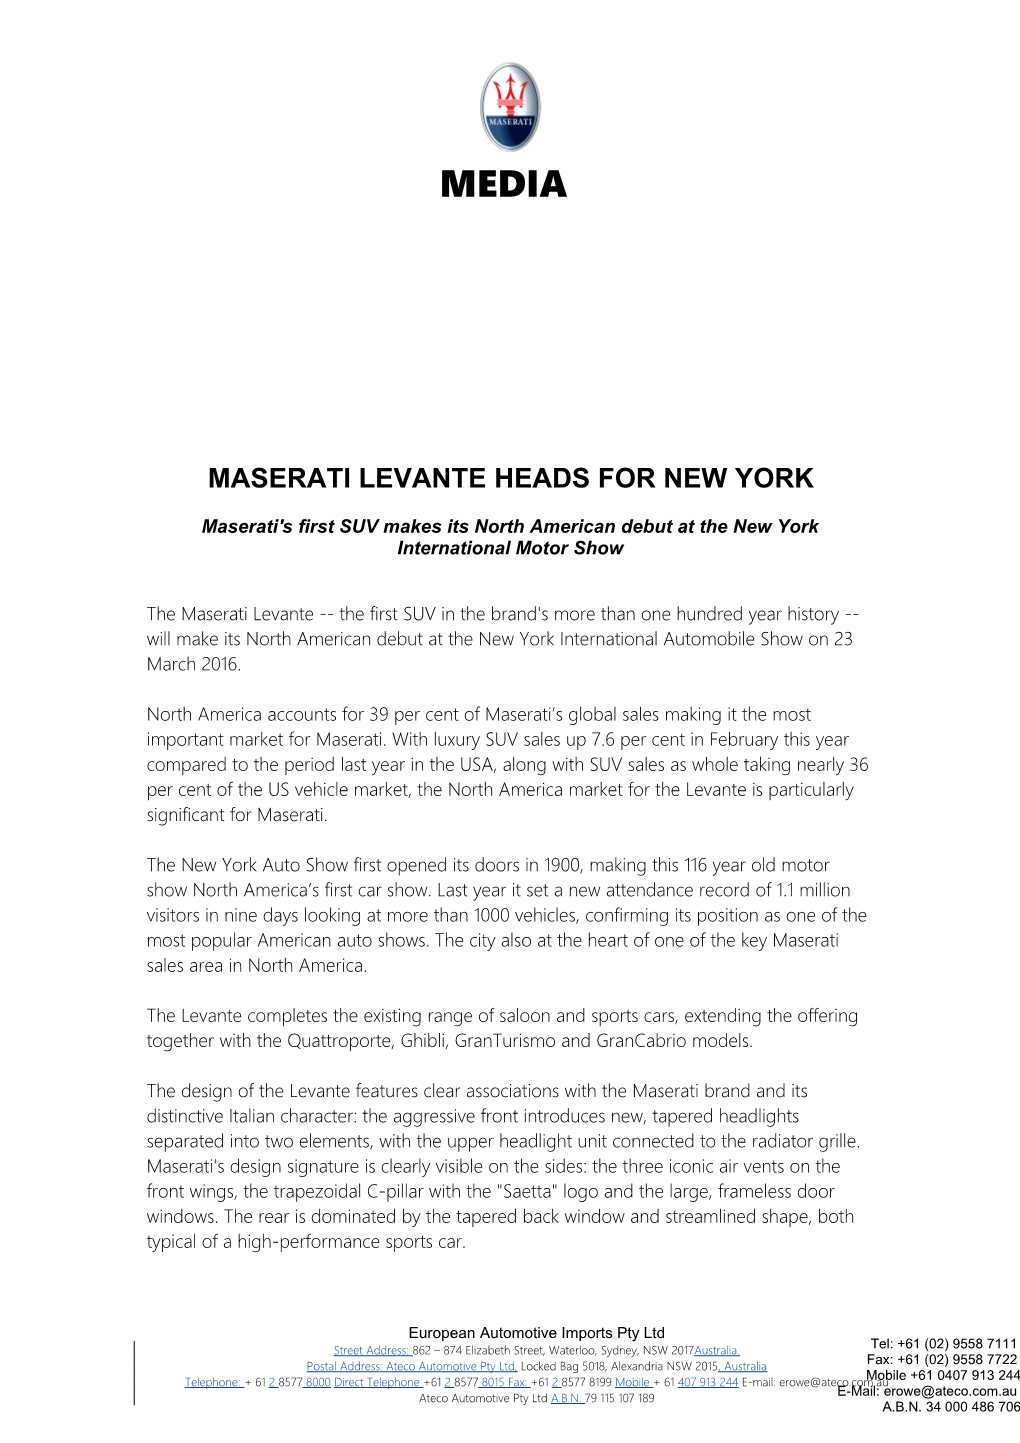 Maserati Levante Heads for New York